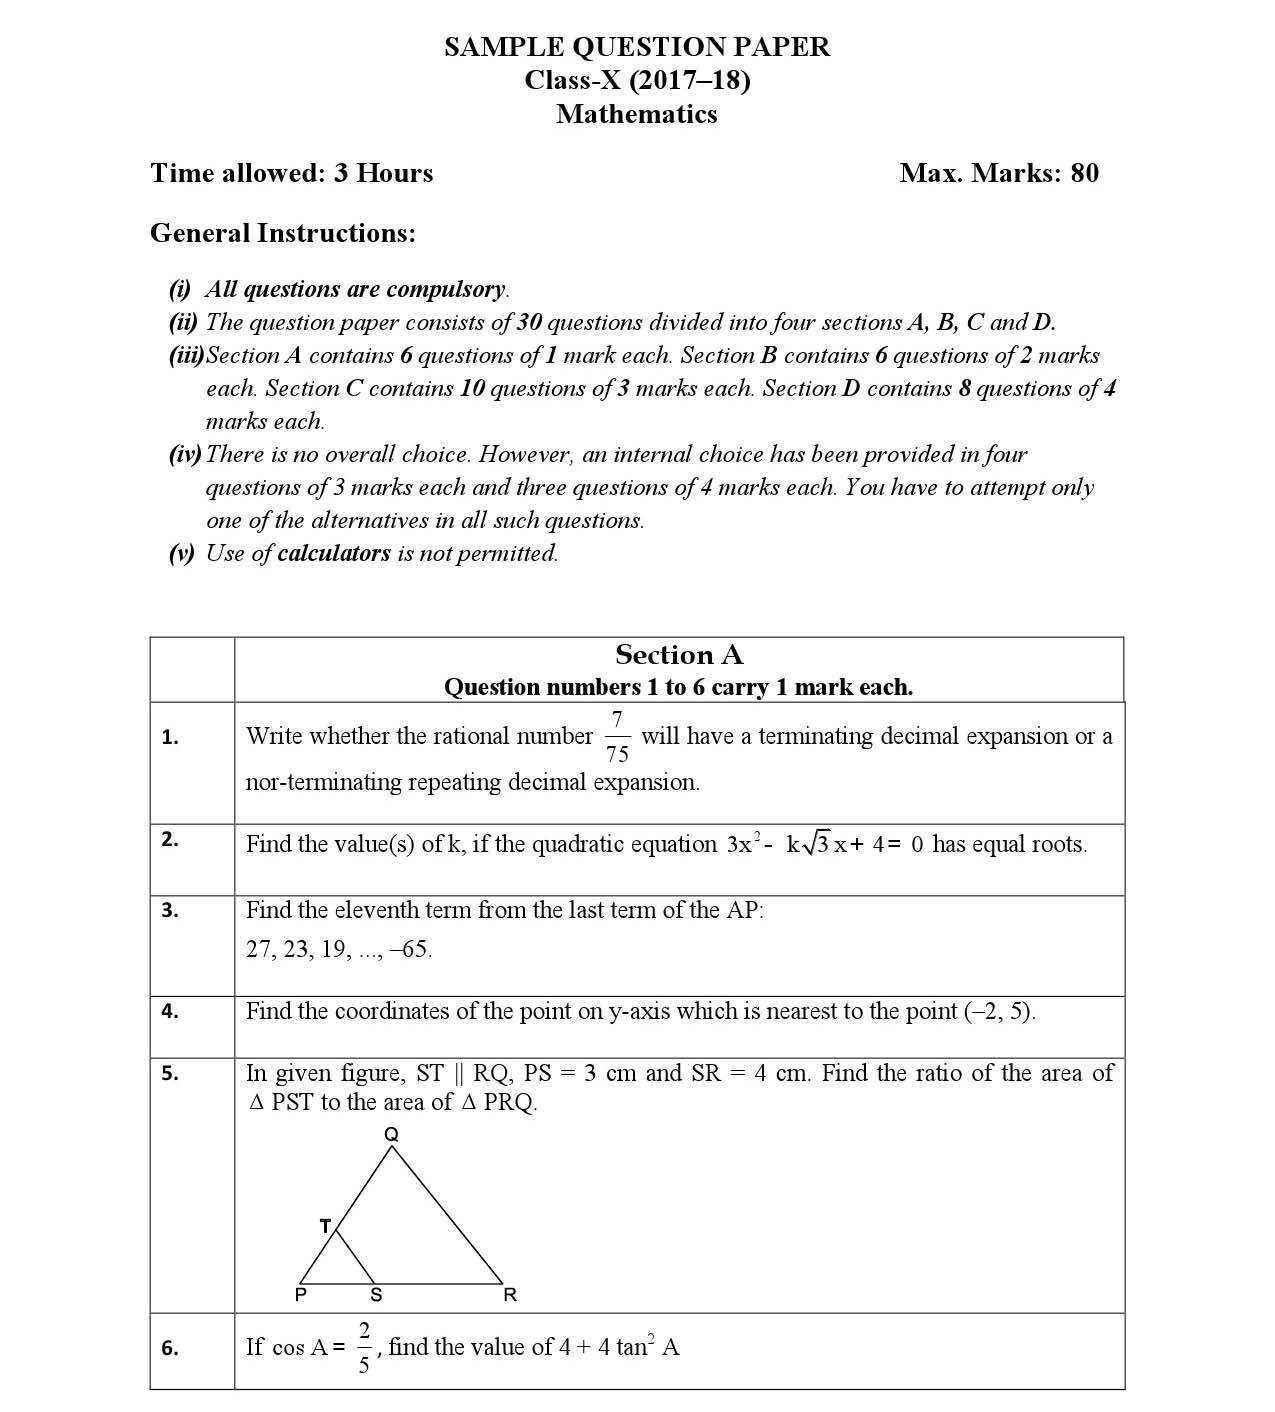 Mathematics CBSE Class X Sample Question Paper 2017 18 - Image 1